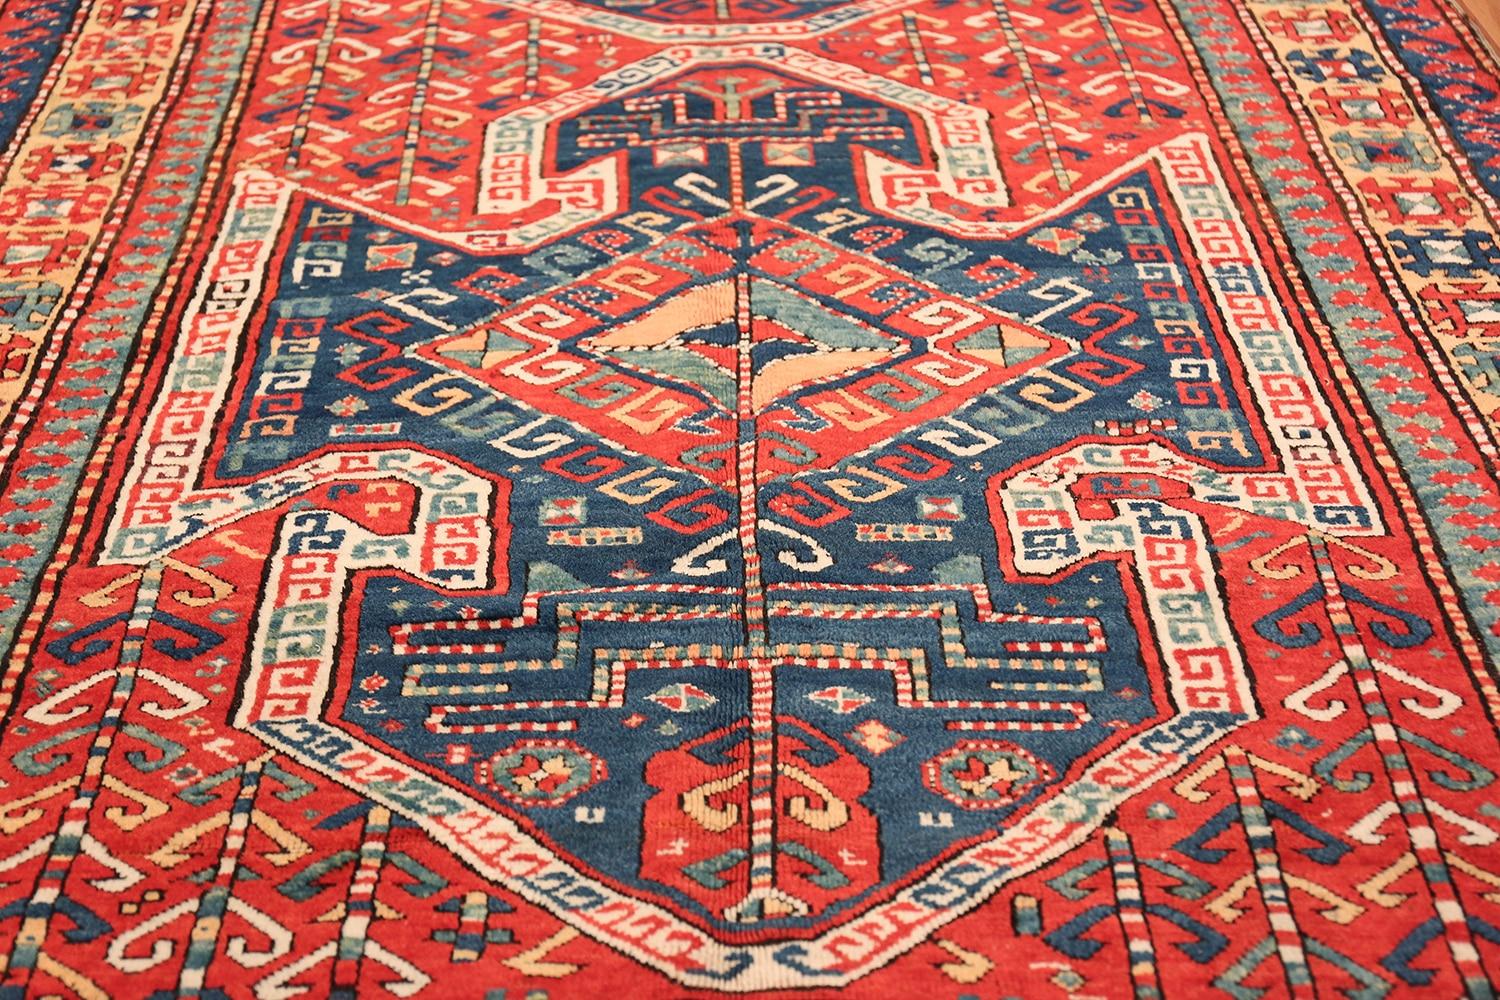 Gallery size runner antique Tribal Caucasian Kazak rug, Country of origin / rug Type: Caucasian rugs, Circa date: 1900. Size: 5 ft 6 in x 11 ft (1.68 m x 3.35 m)

 